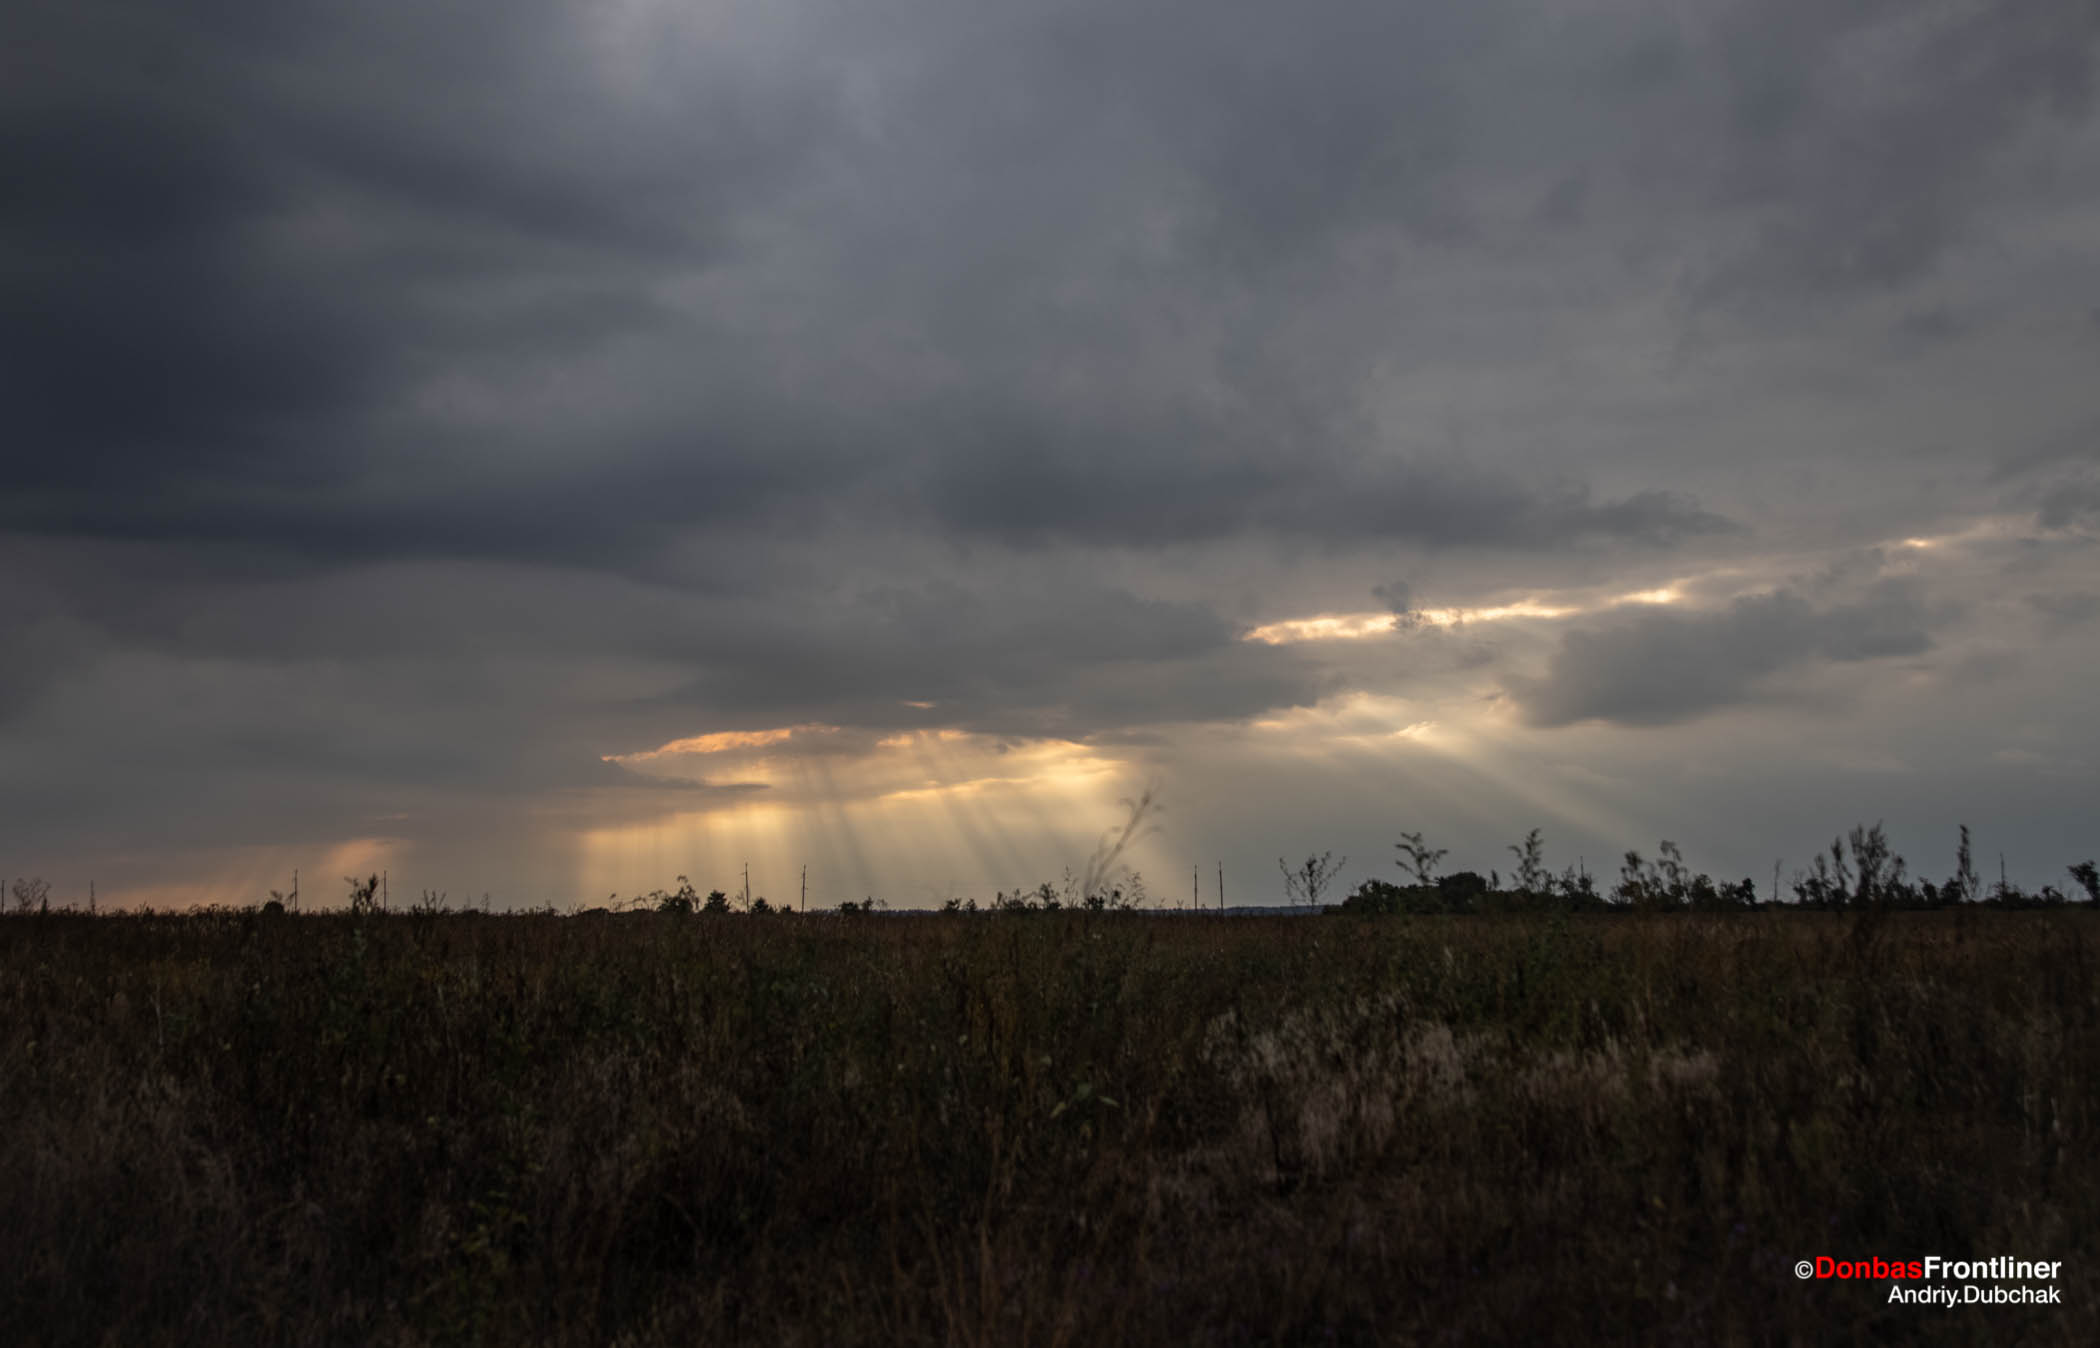 Donbas Frontliner / Sunset at the front line field near Krymske village